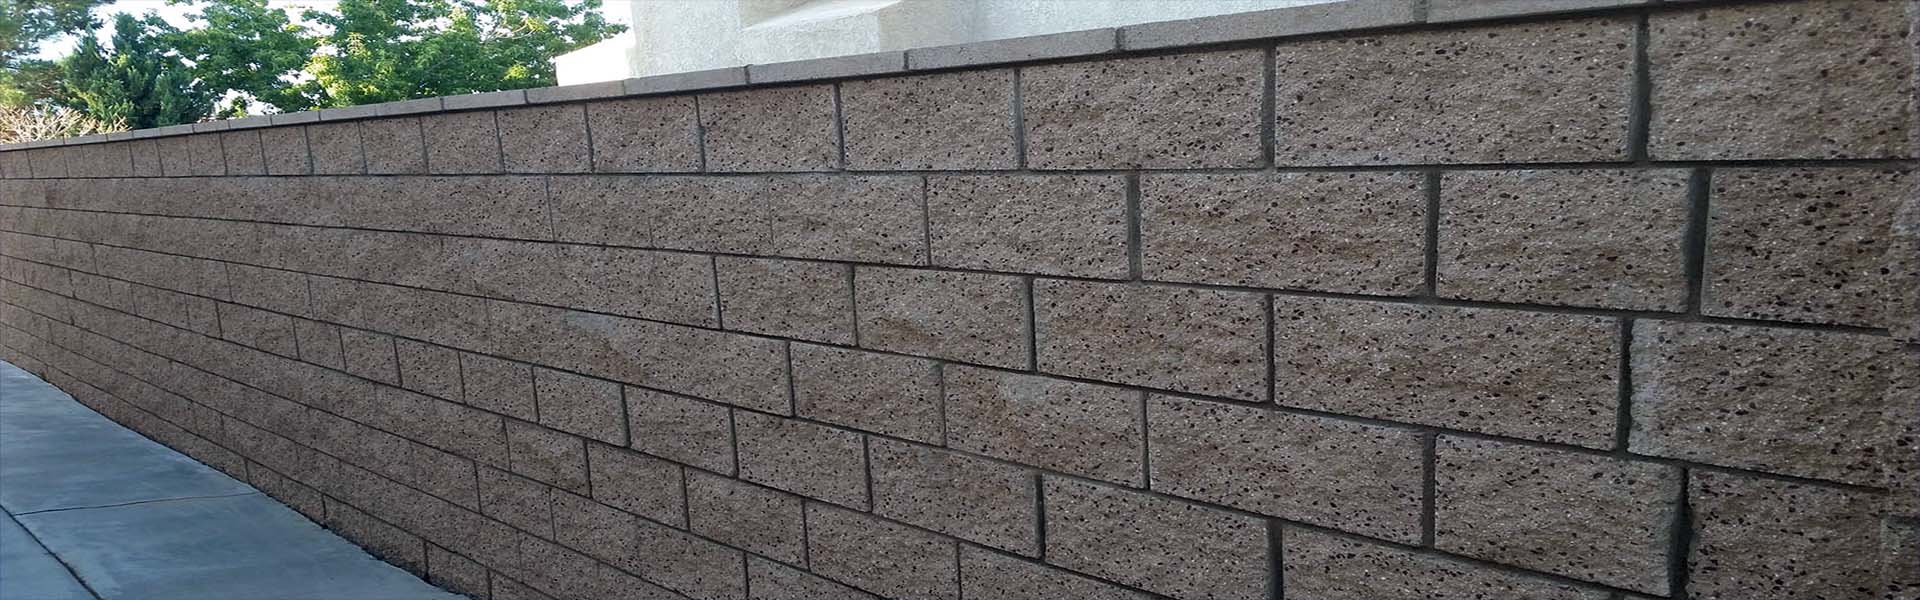 Concrete Wall Block